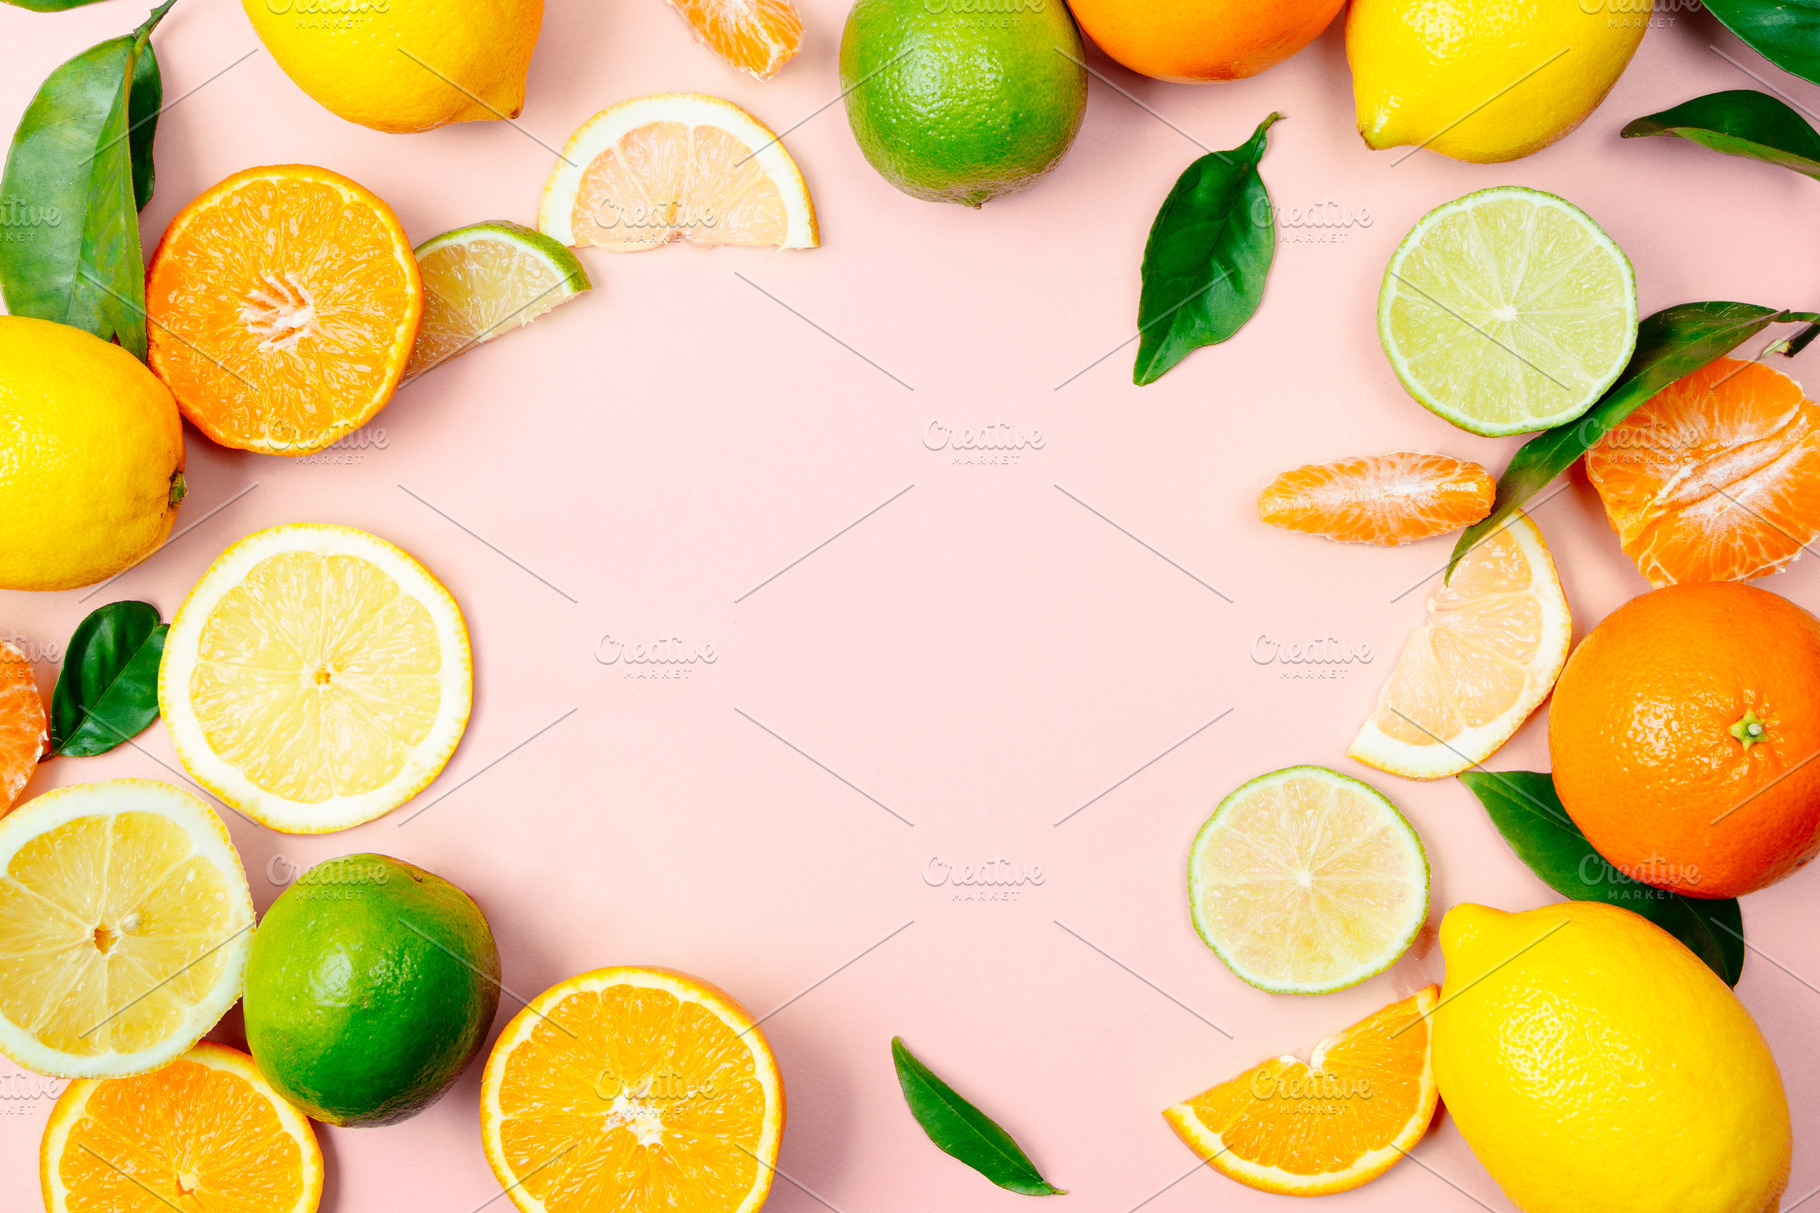 Citrus fruits background ~ Food & Drink Photos ~ Creative ...